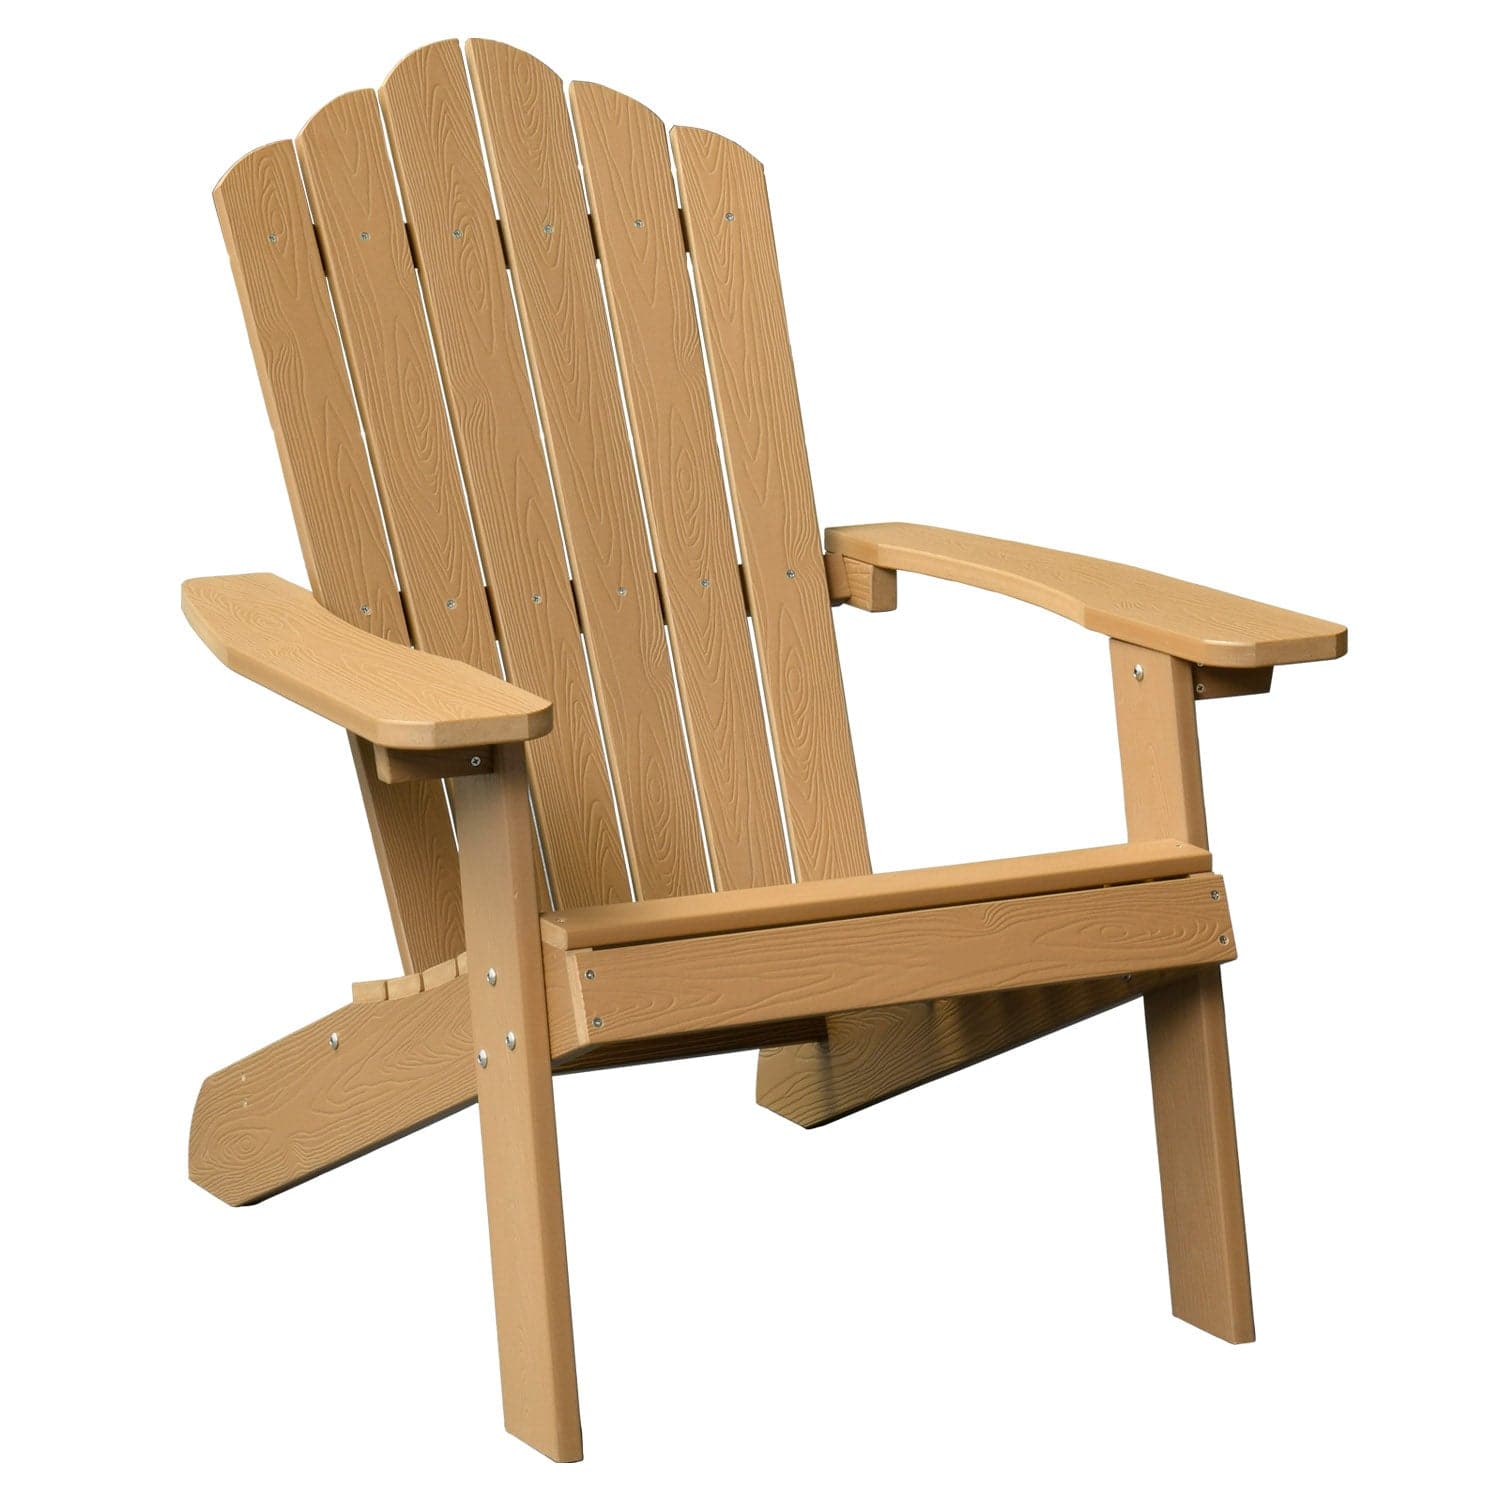 Ovios Patio Chairs Adirondack Waterproof Lounge Chair